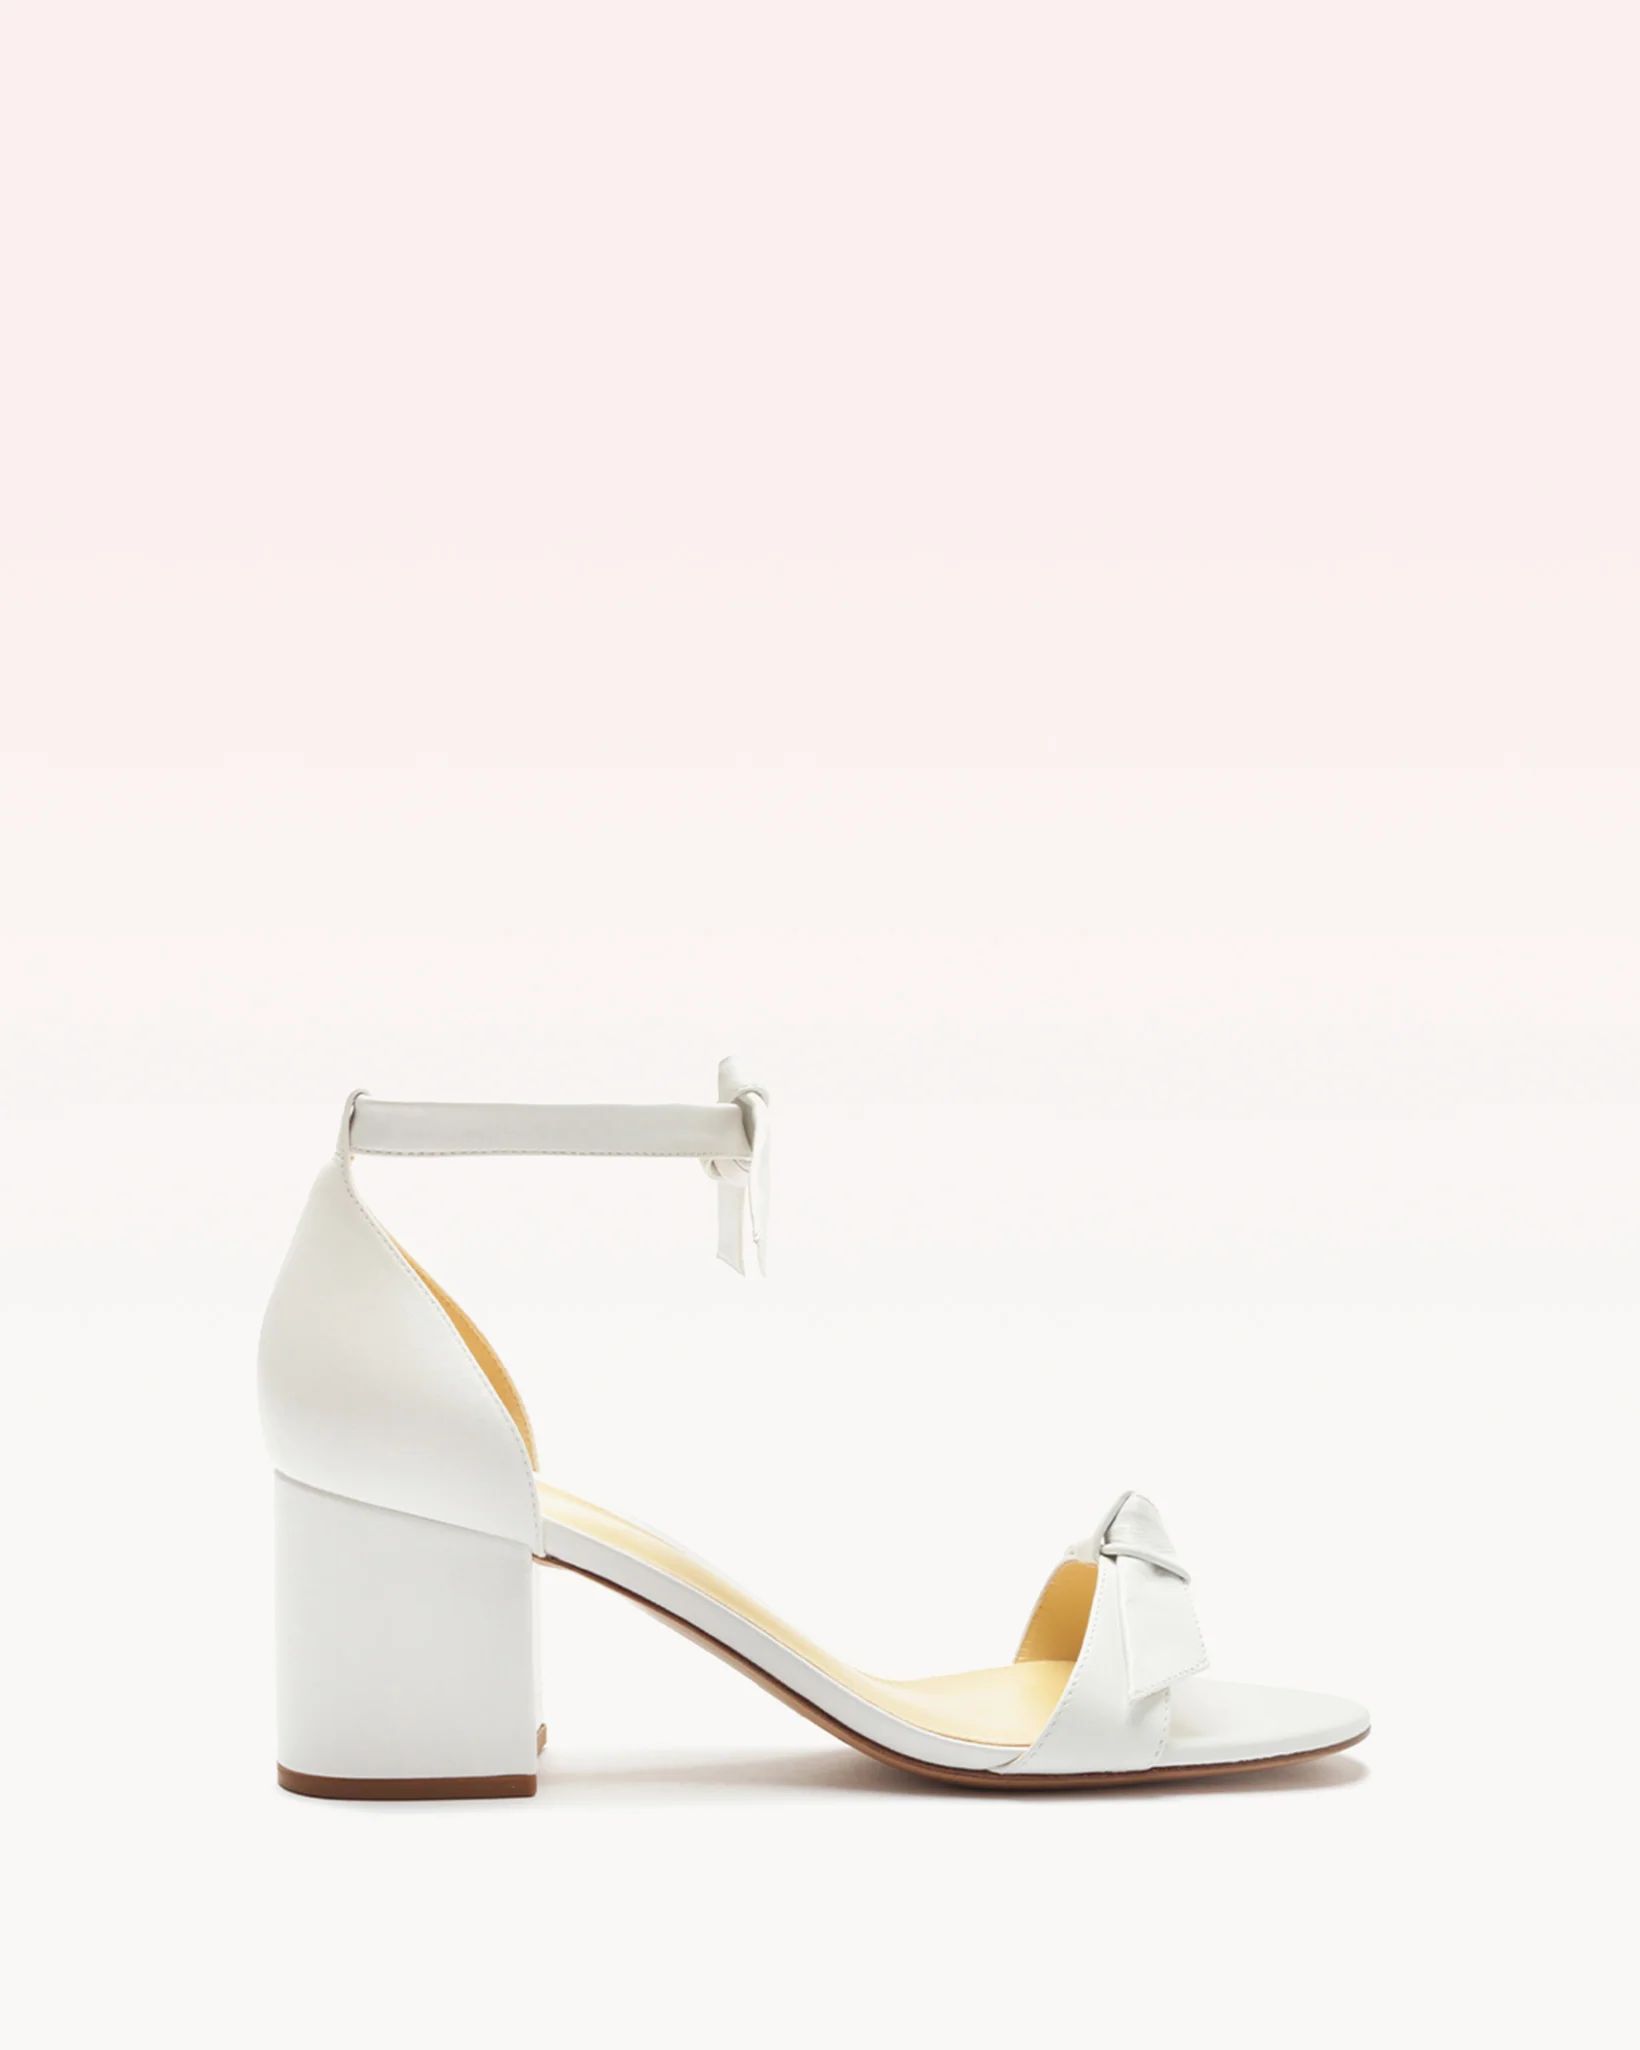 Clarita Block 60 Sandal in White Leather | Alexandre Birman | Alexandre Birman